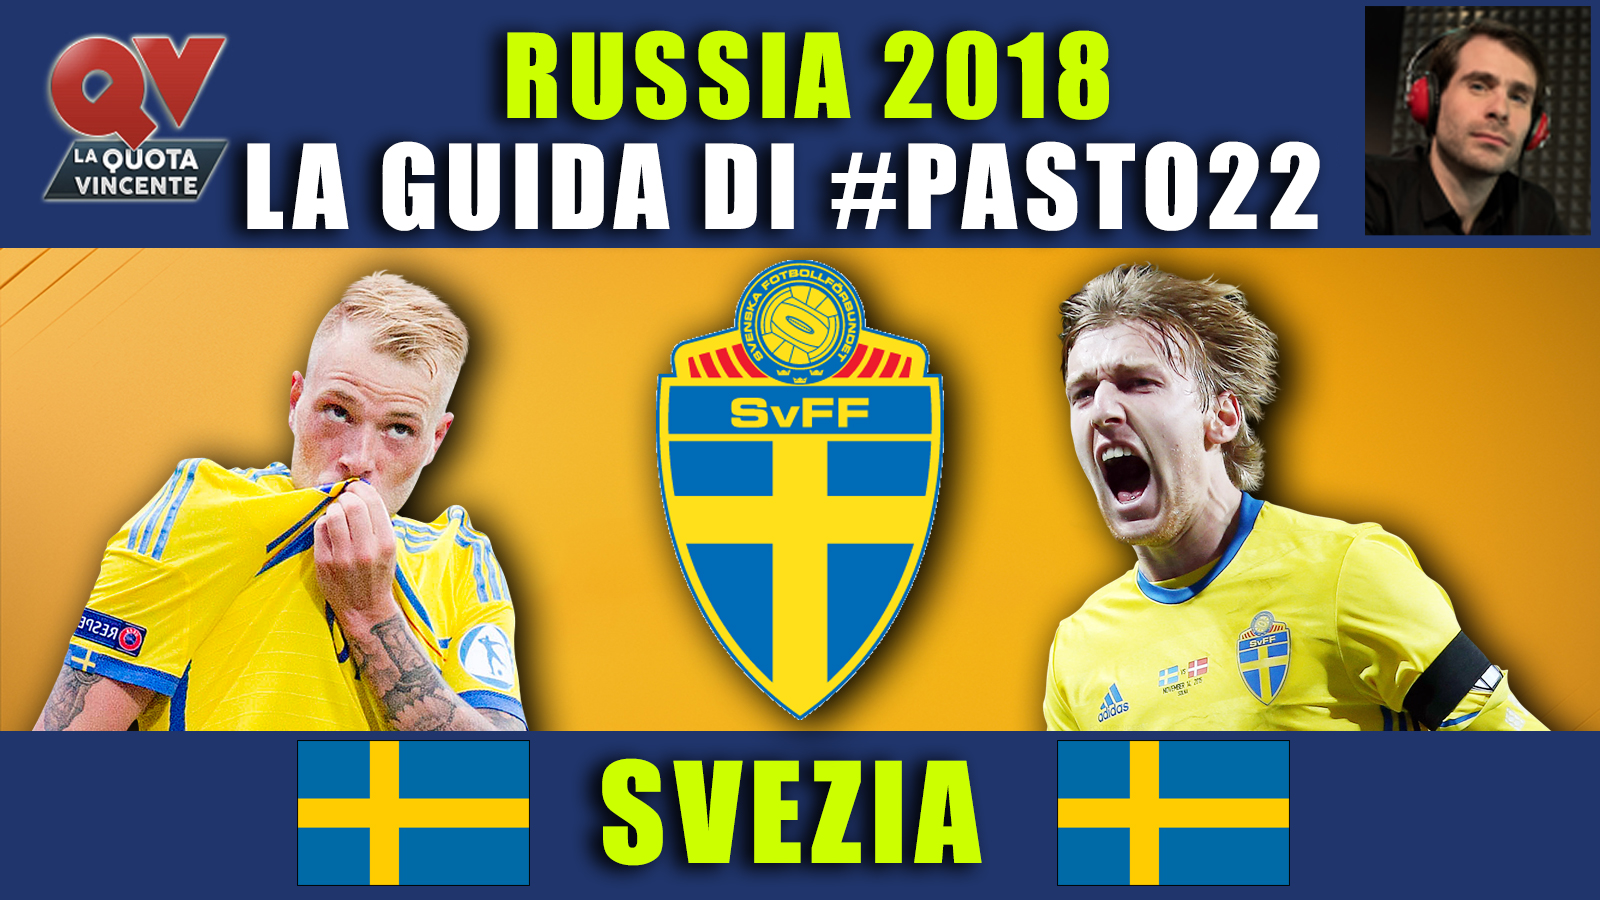 Guida Mondiali Russia 2018 Svezia